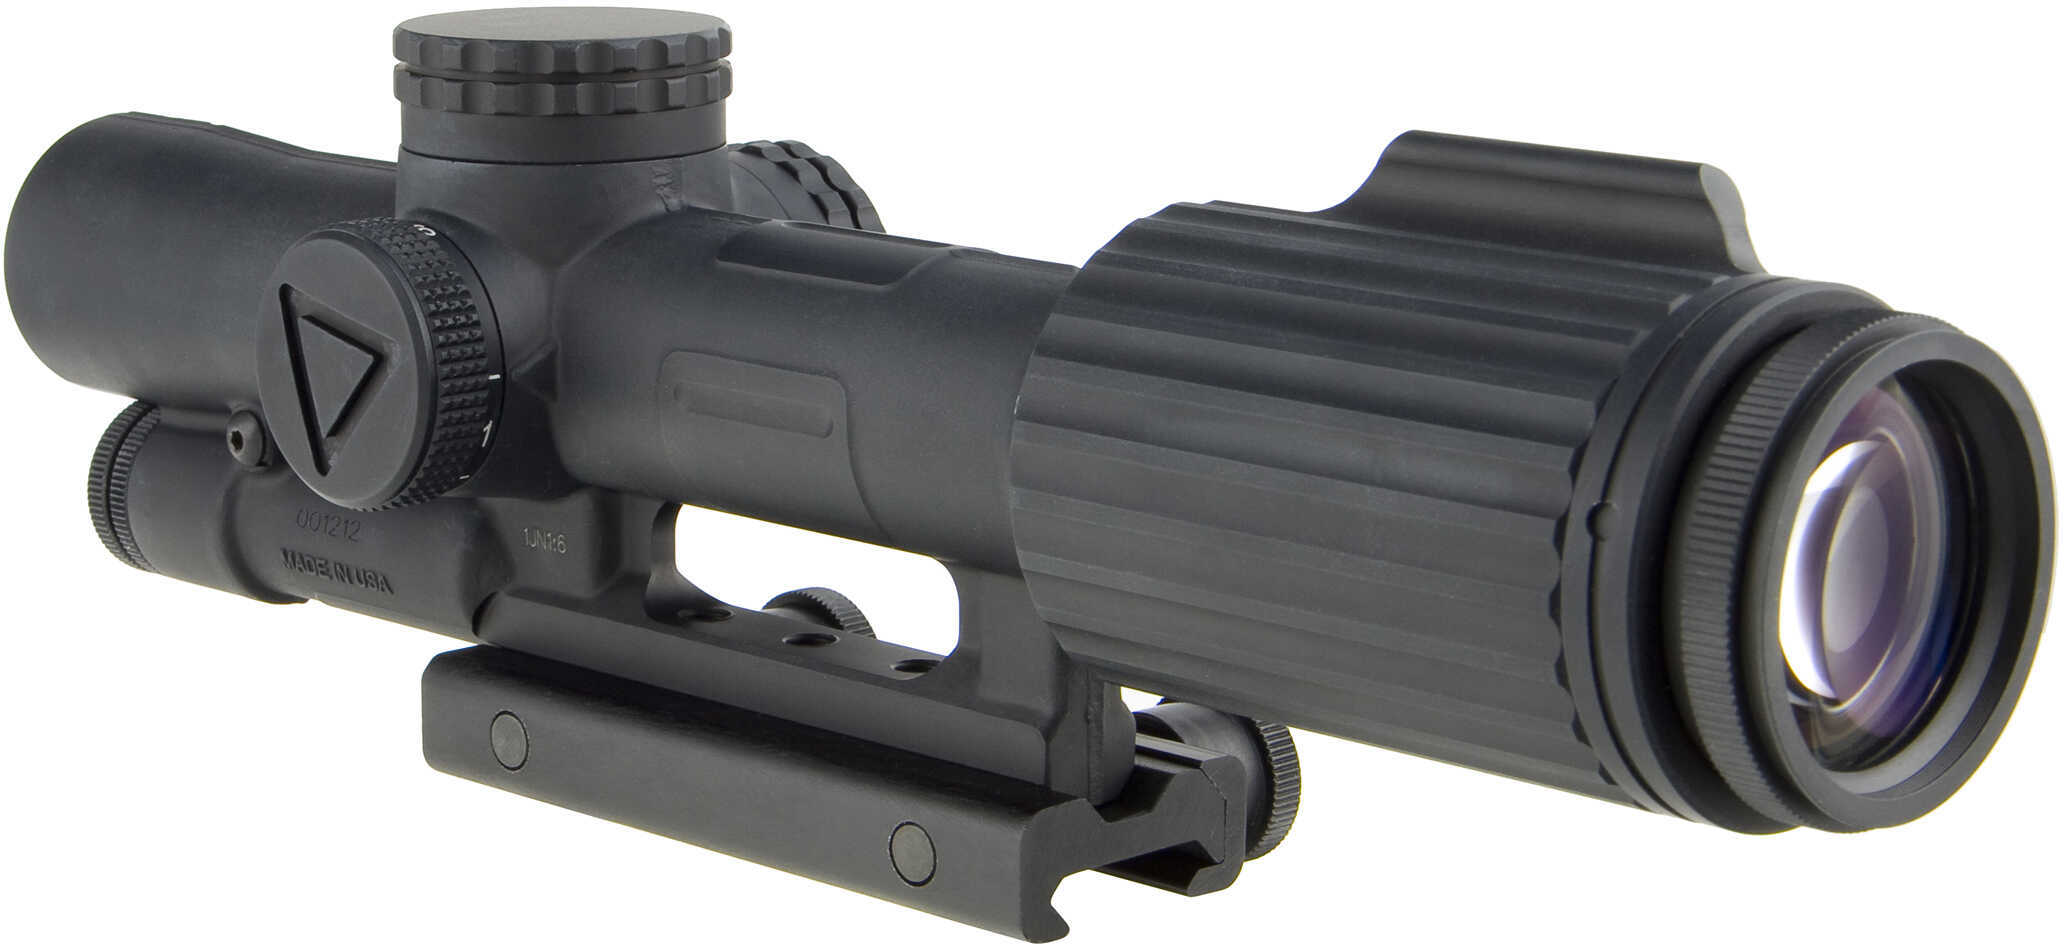 VCOG 1-6x24mm Green Horseshoe Dot/Crosshair Riflescope .308/175 Grains Ballistic Reticle with Thumb